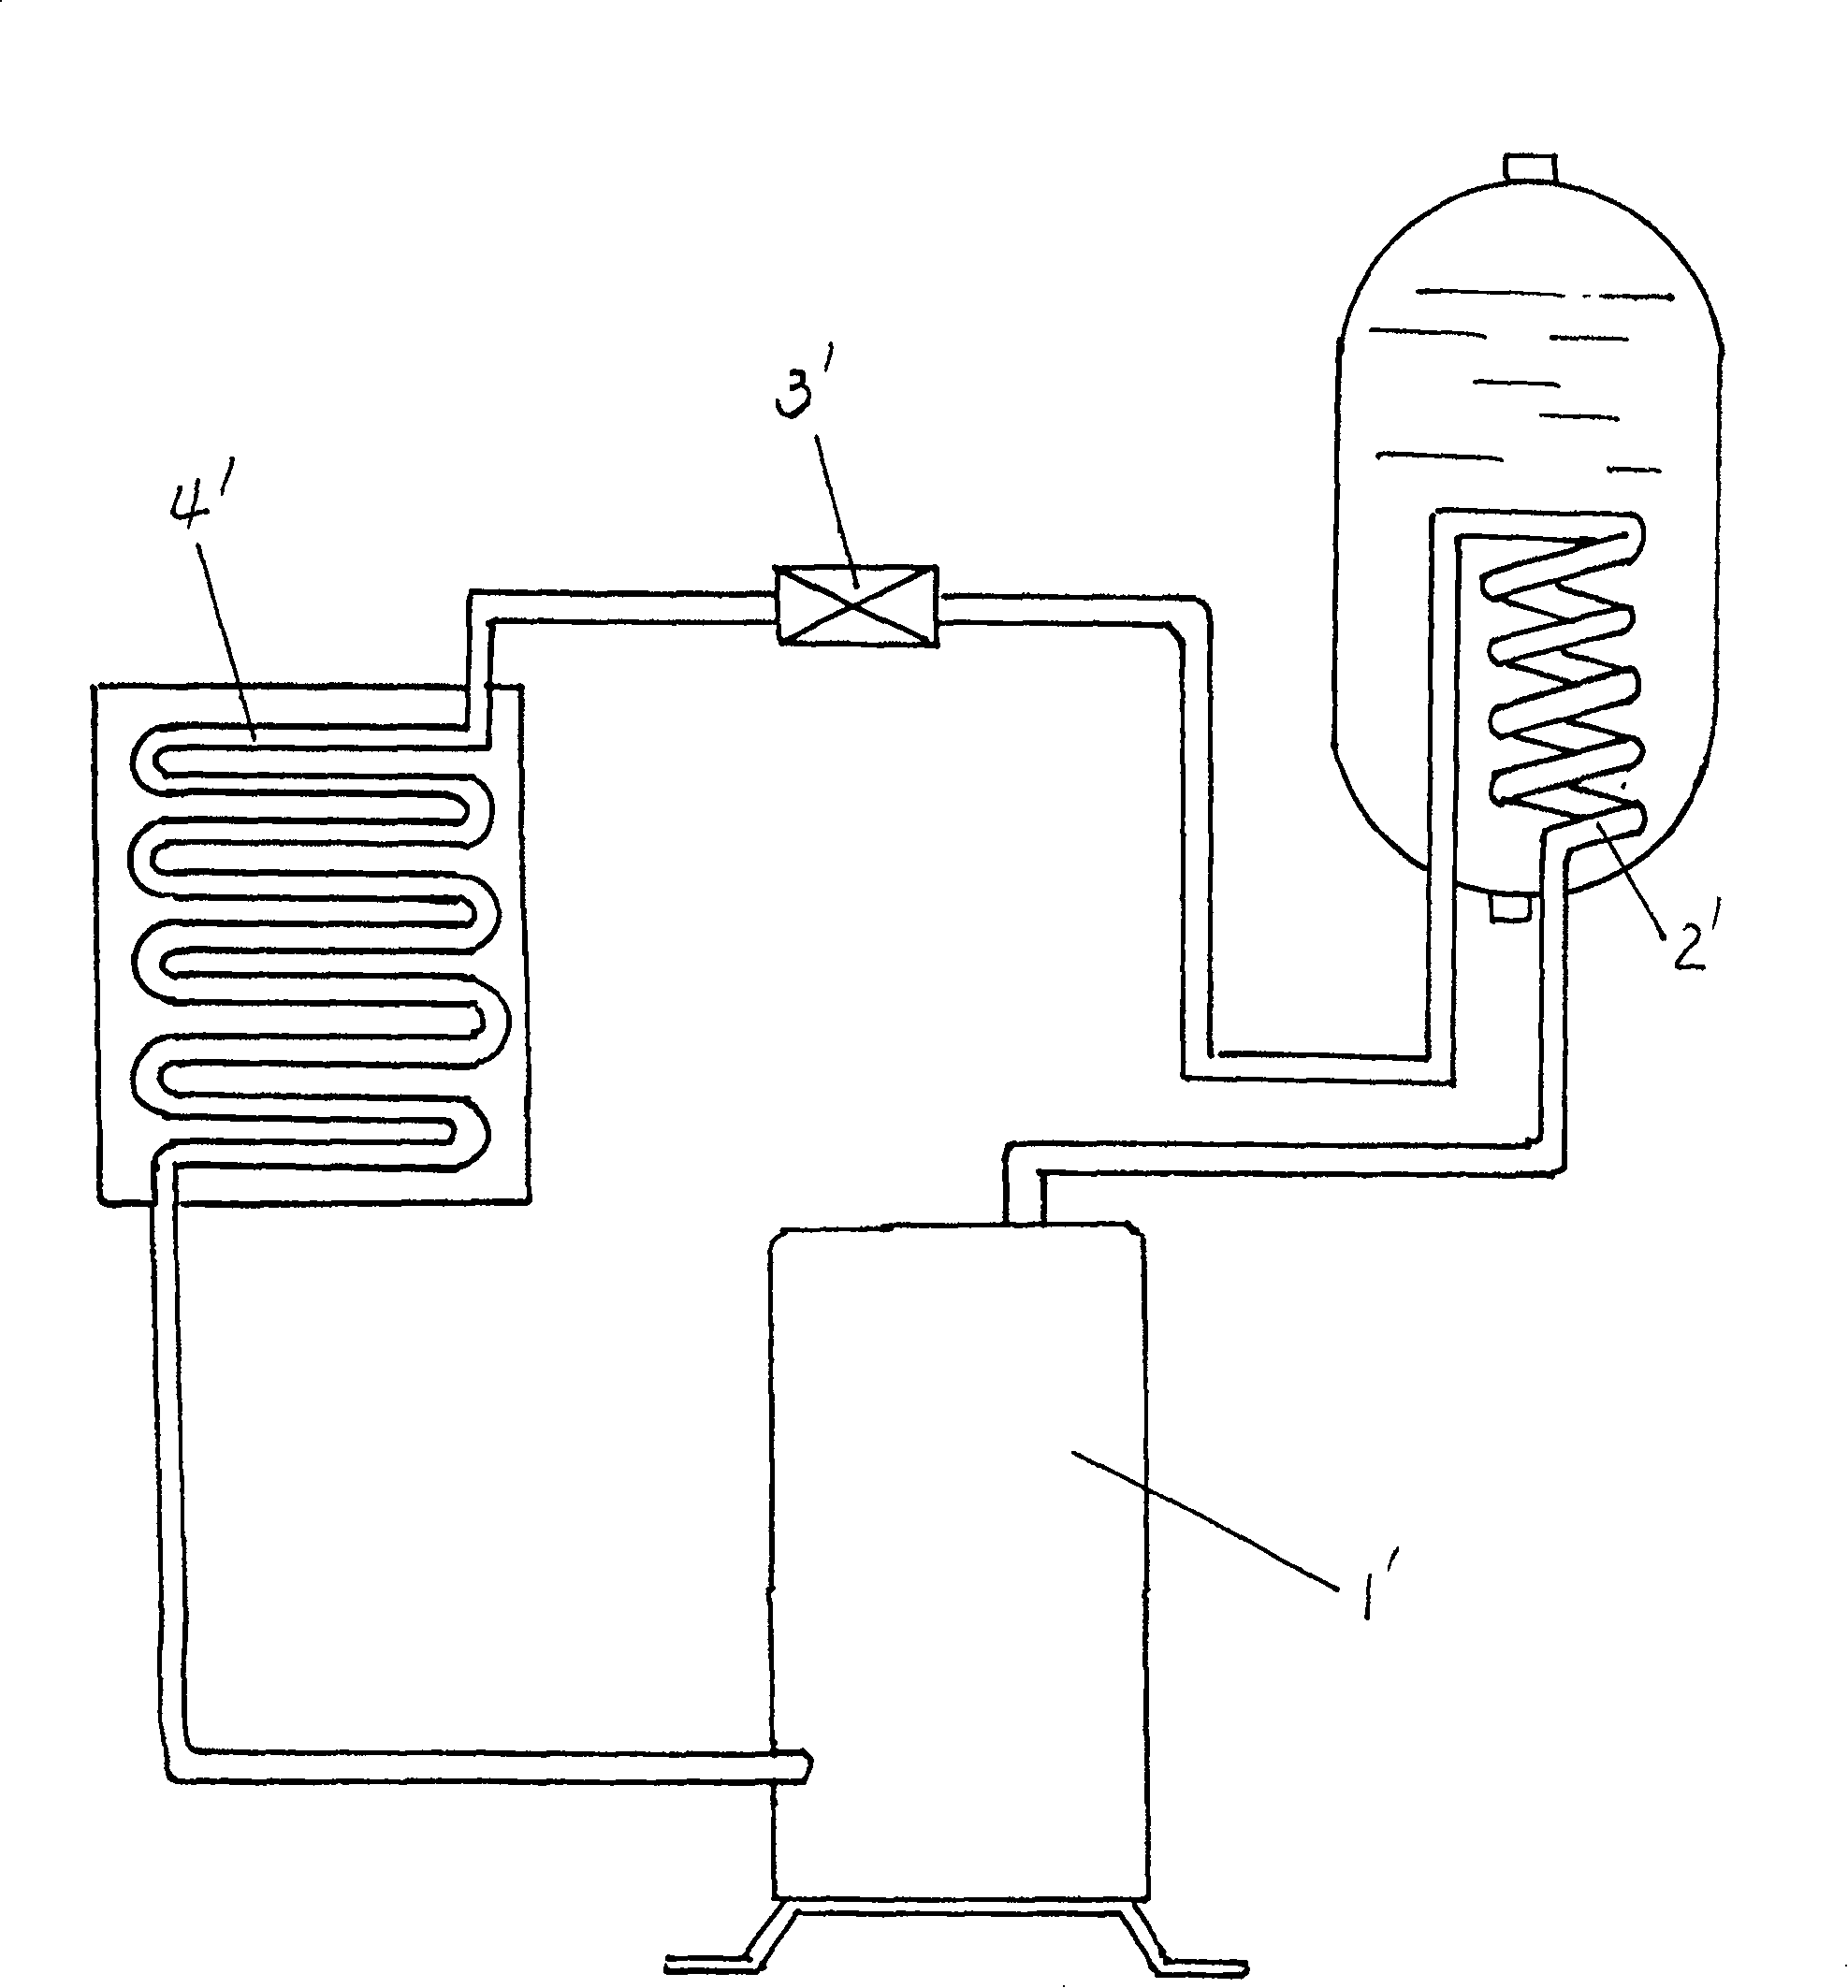 Heat pump system of heat pump water heater